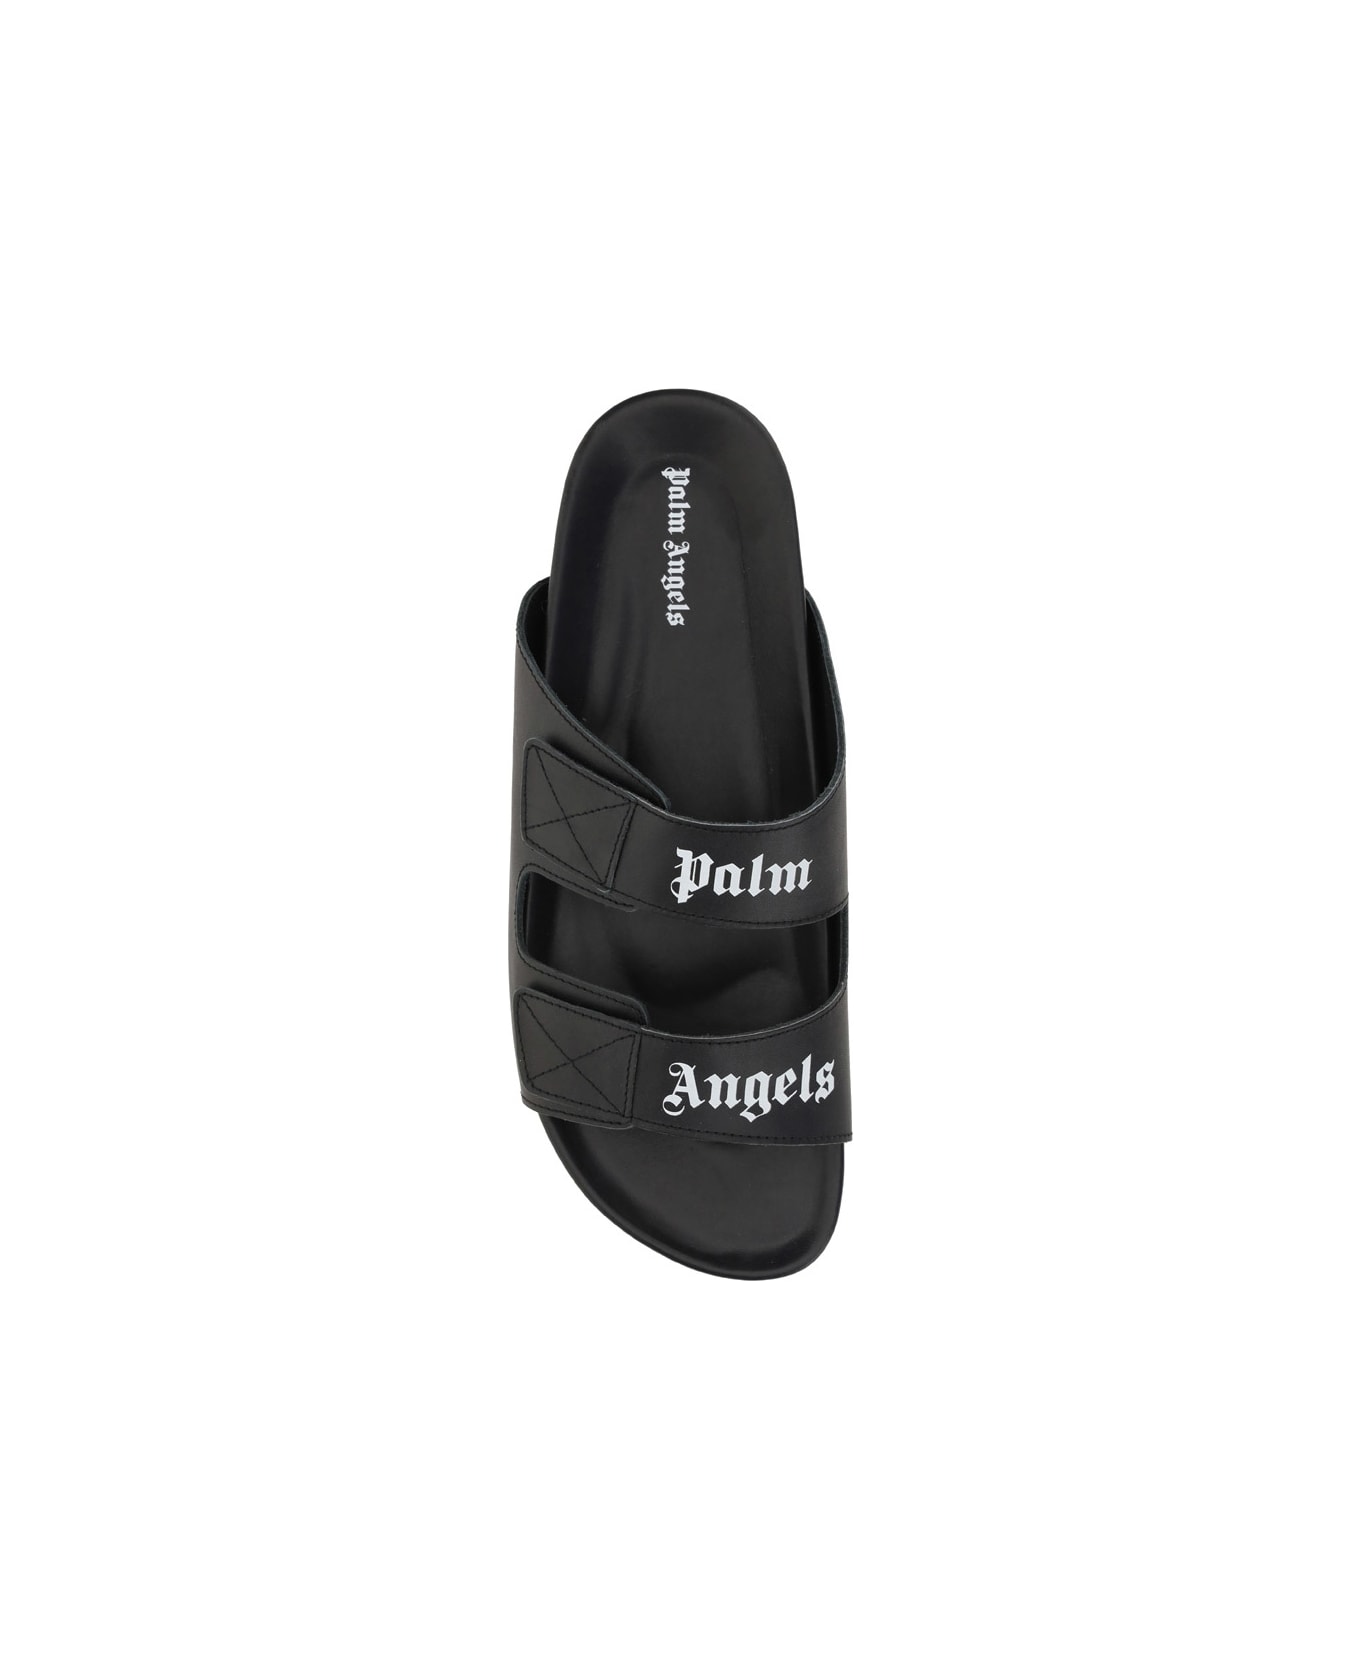 Palm Angels Sandal With Logo - Black